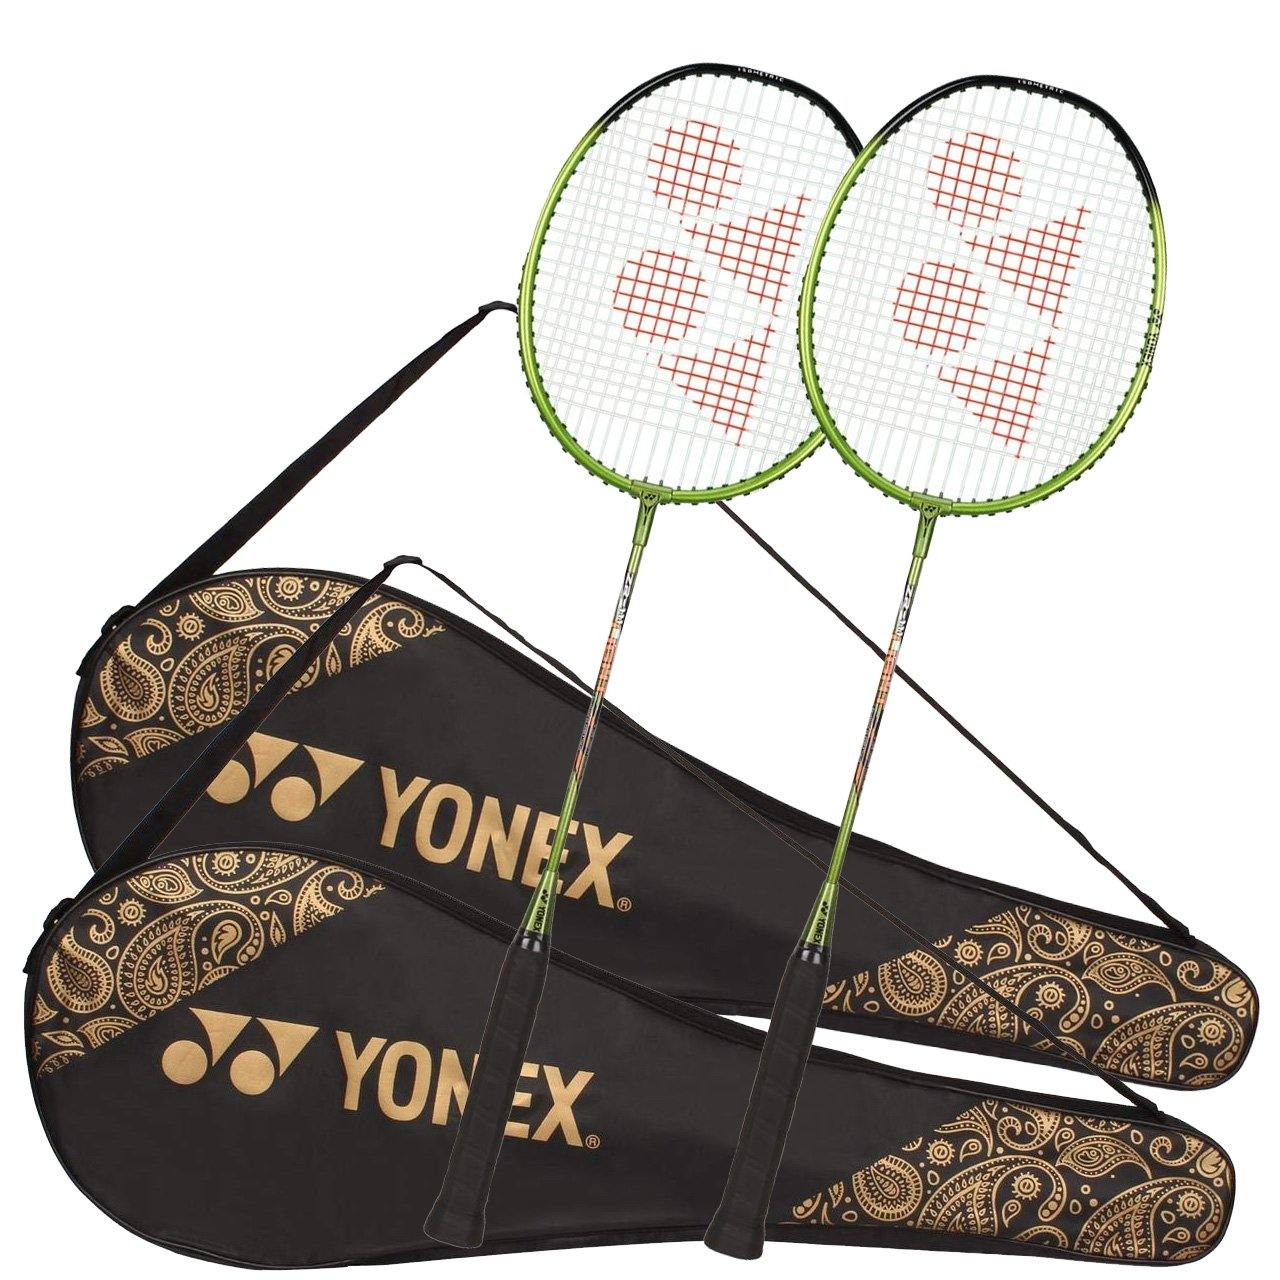 Yonex ZR 111 Light Strung Badminton Racquet, Lime (Full Cover) - Set of 2 Racquets - Best Price online Prokicksports.com